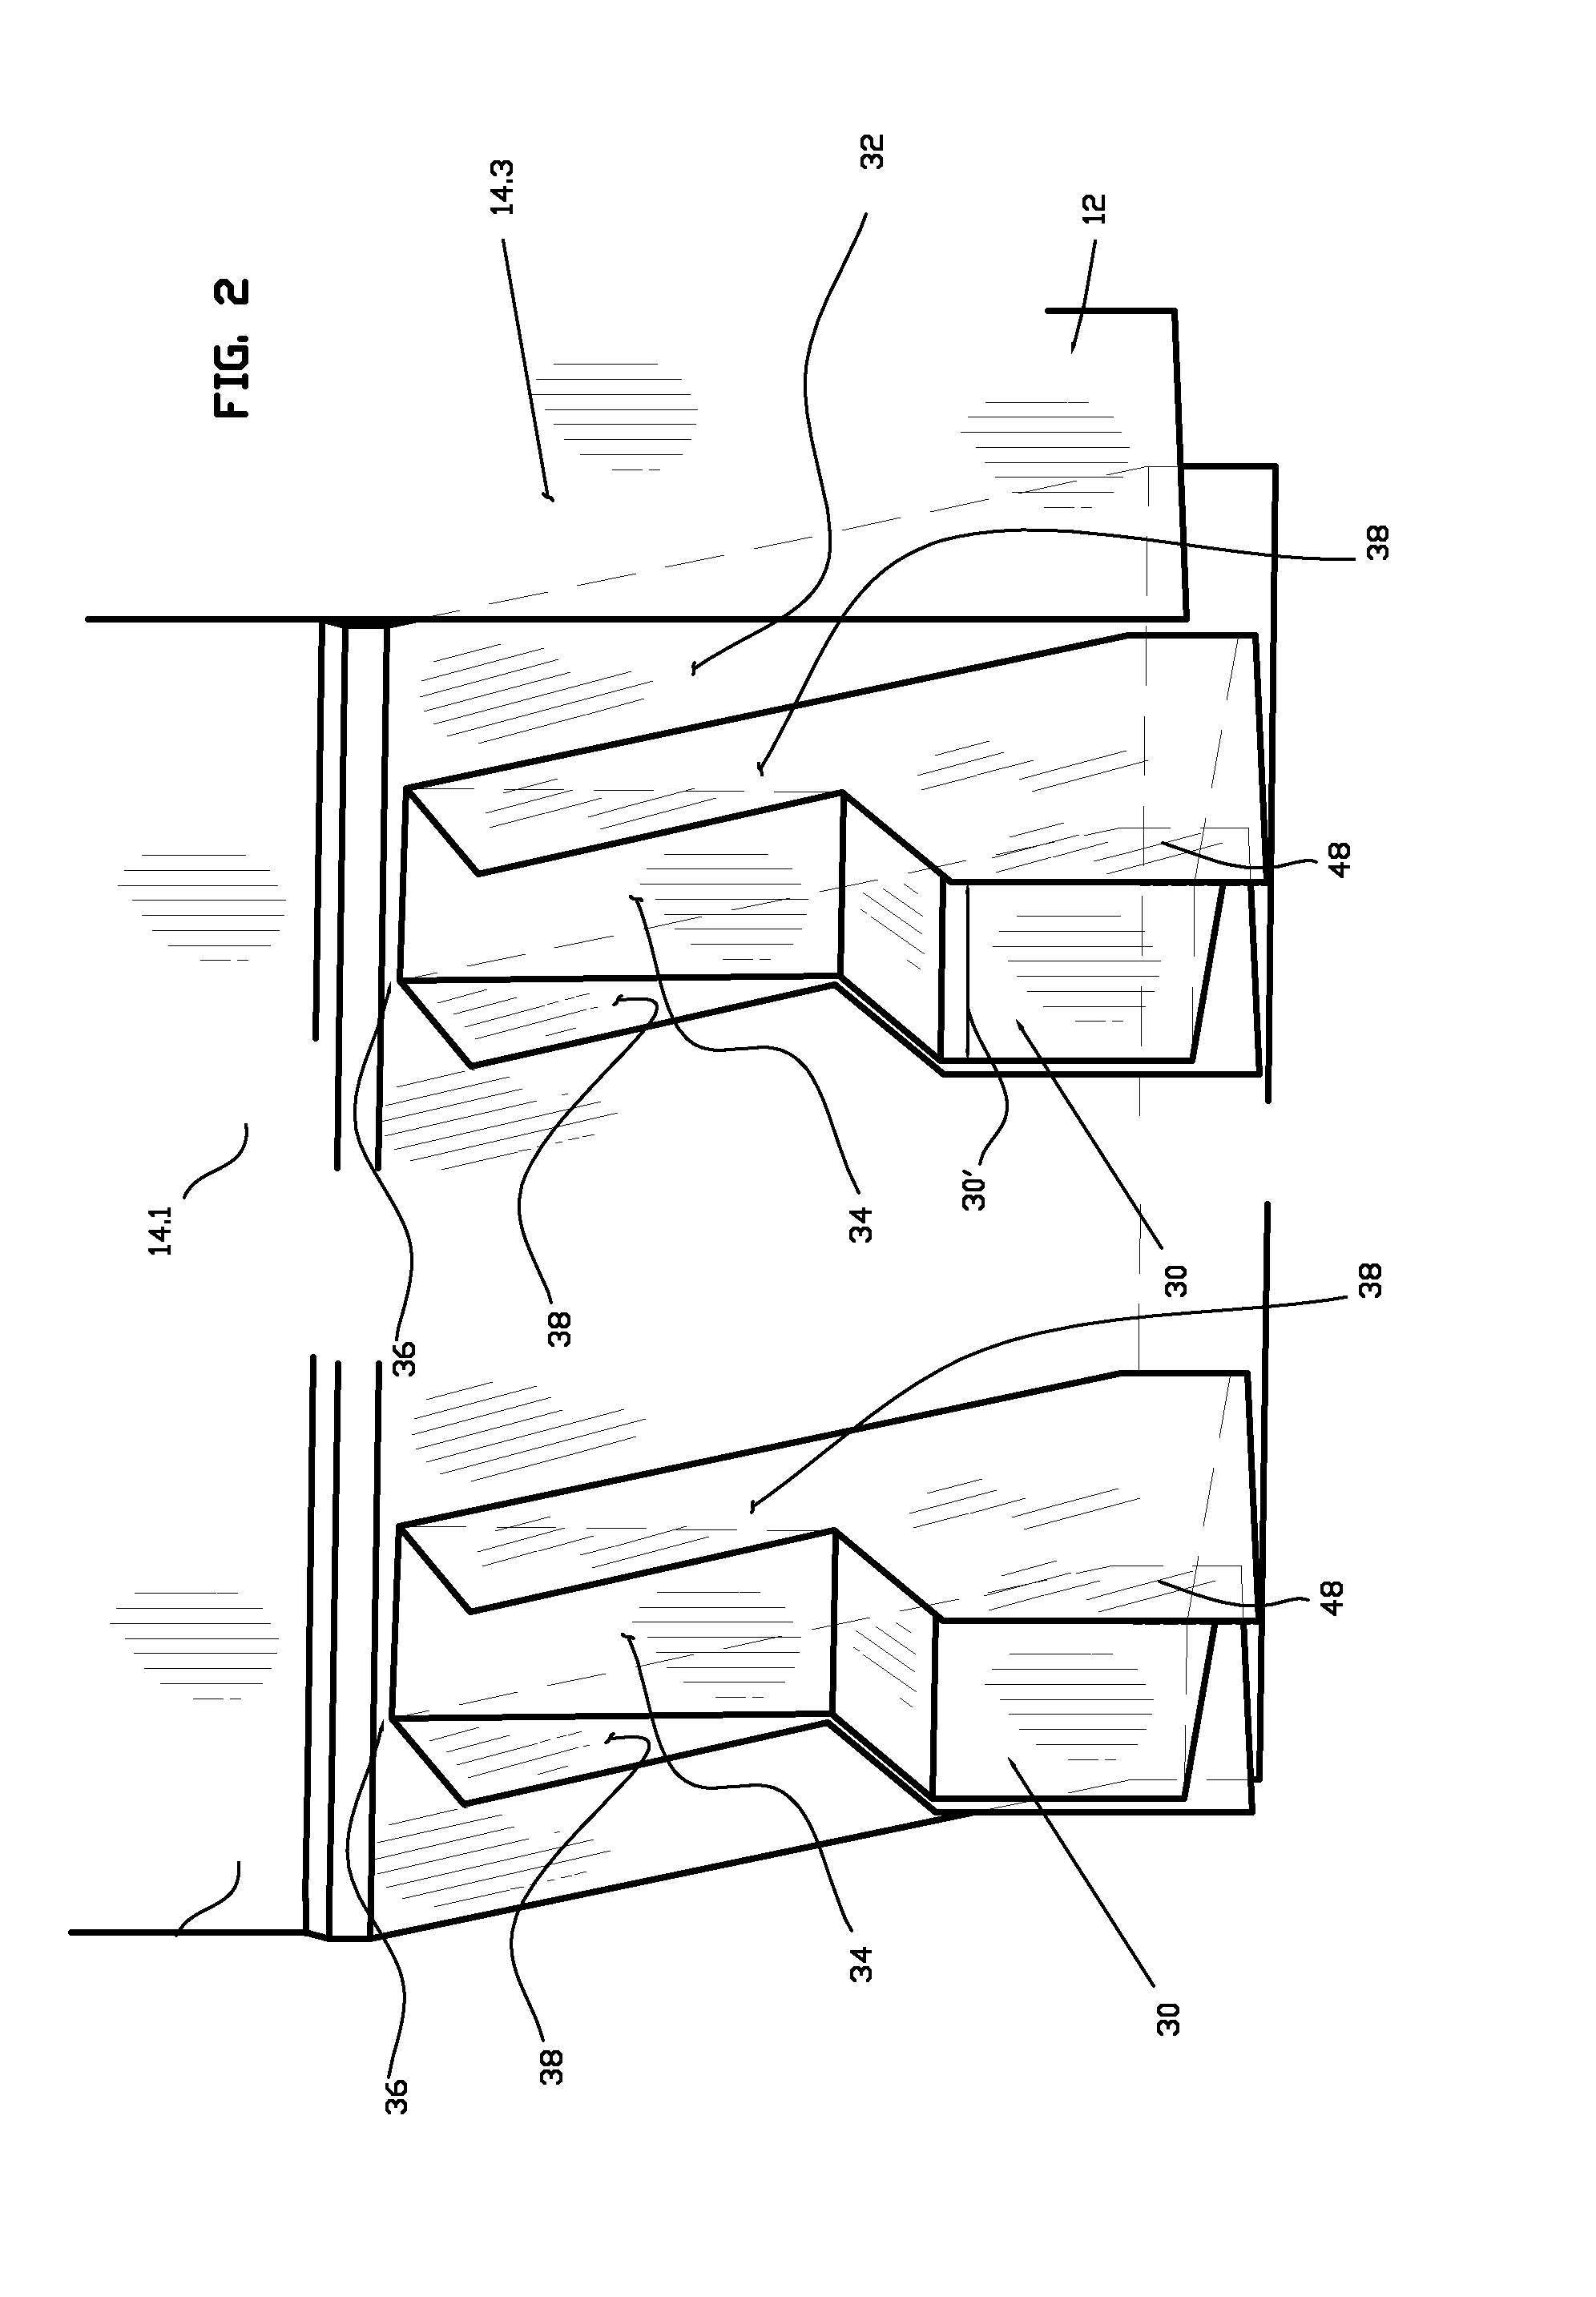 Fluidized Bed Reactor Arrangement